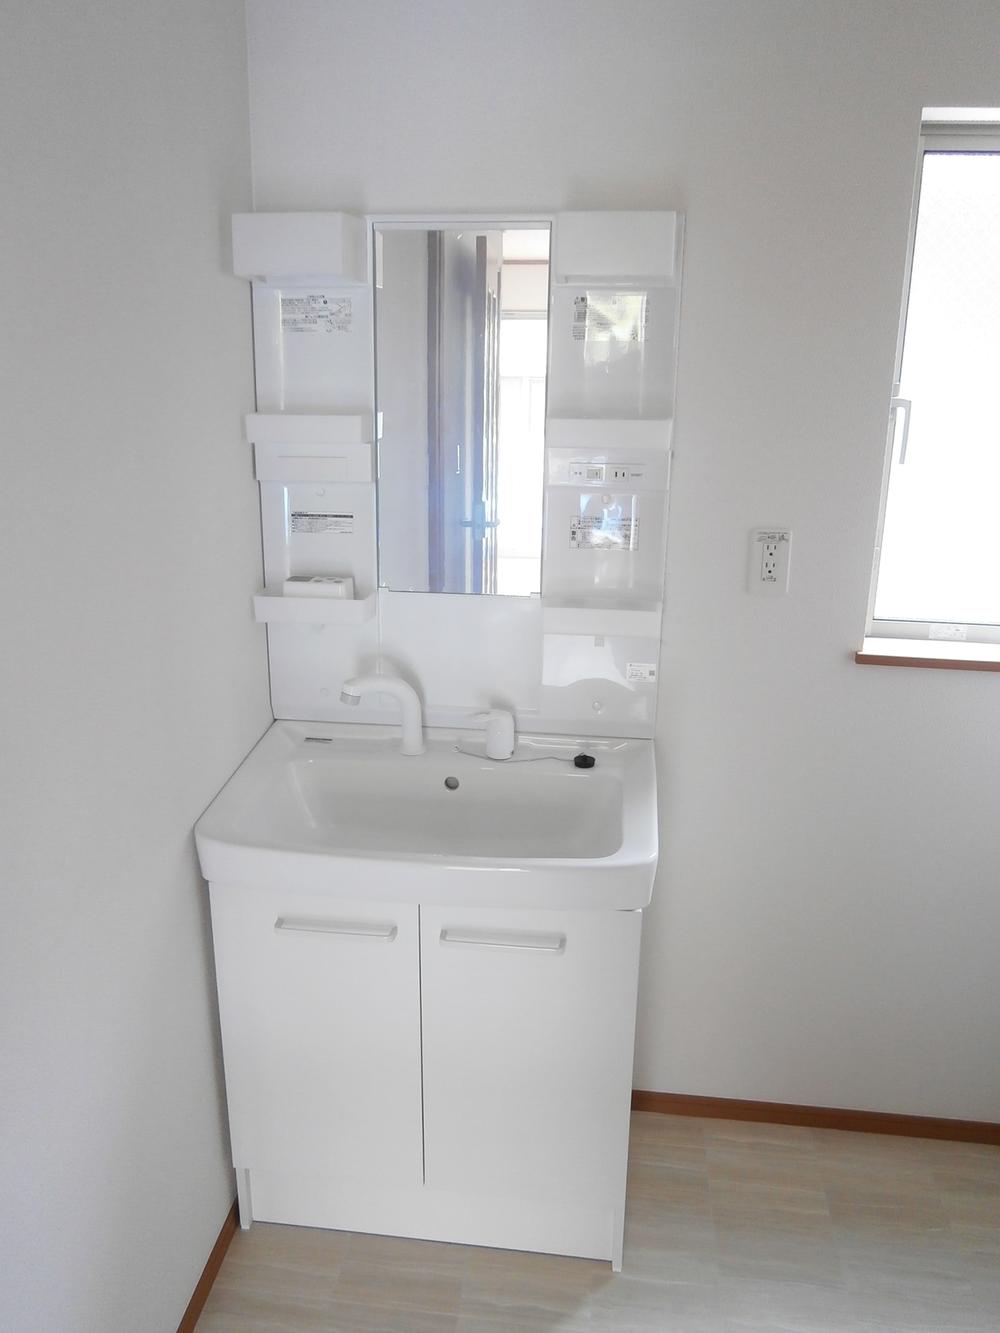 Wash basin, toilet. Same specifications vanity